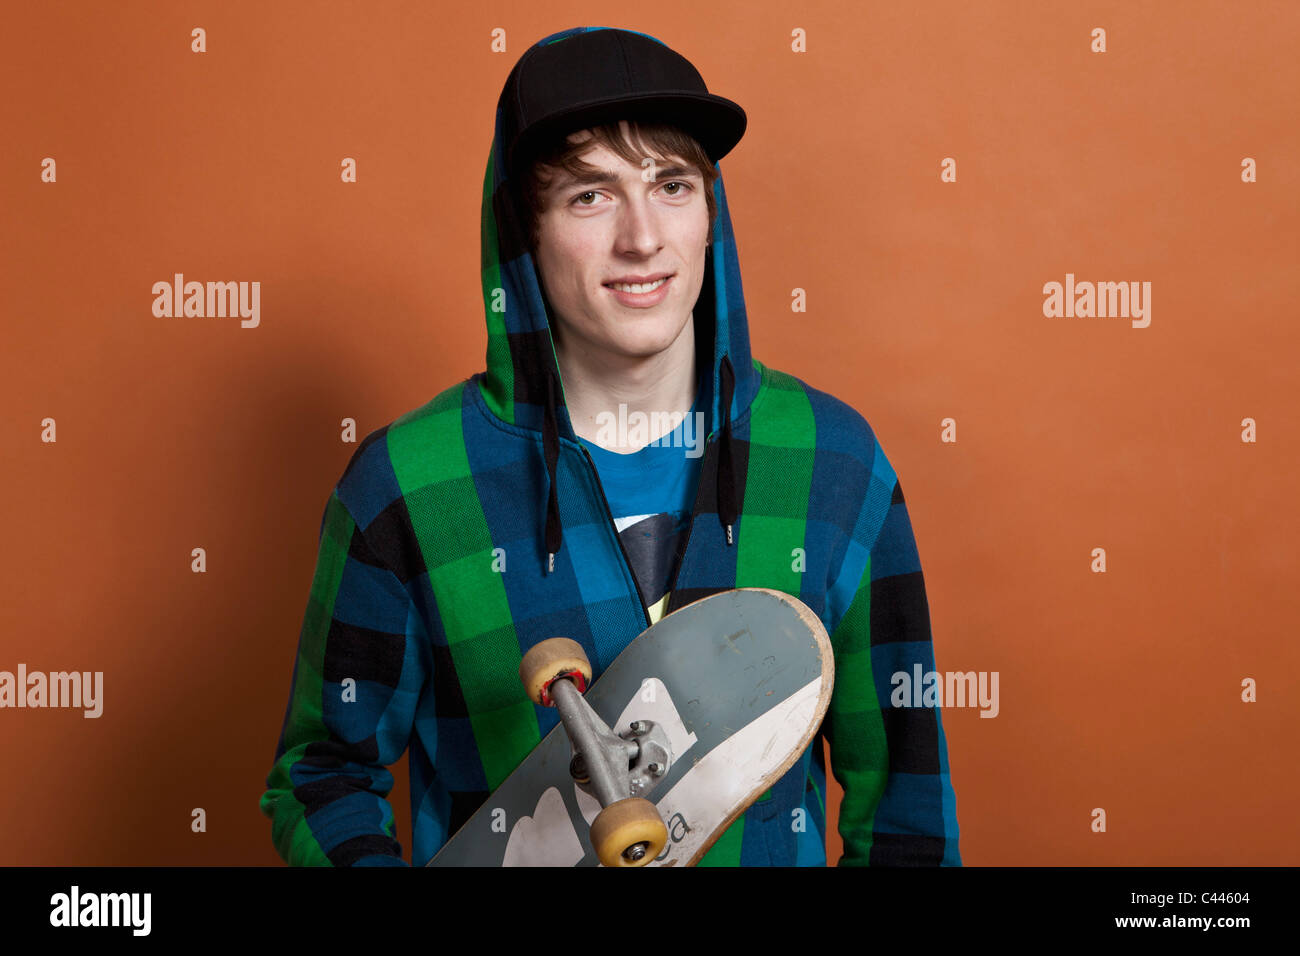 A teenage boy holding a skateboard, portrait, studio shot Stock Photo